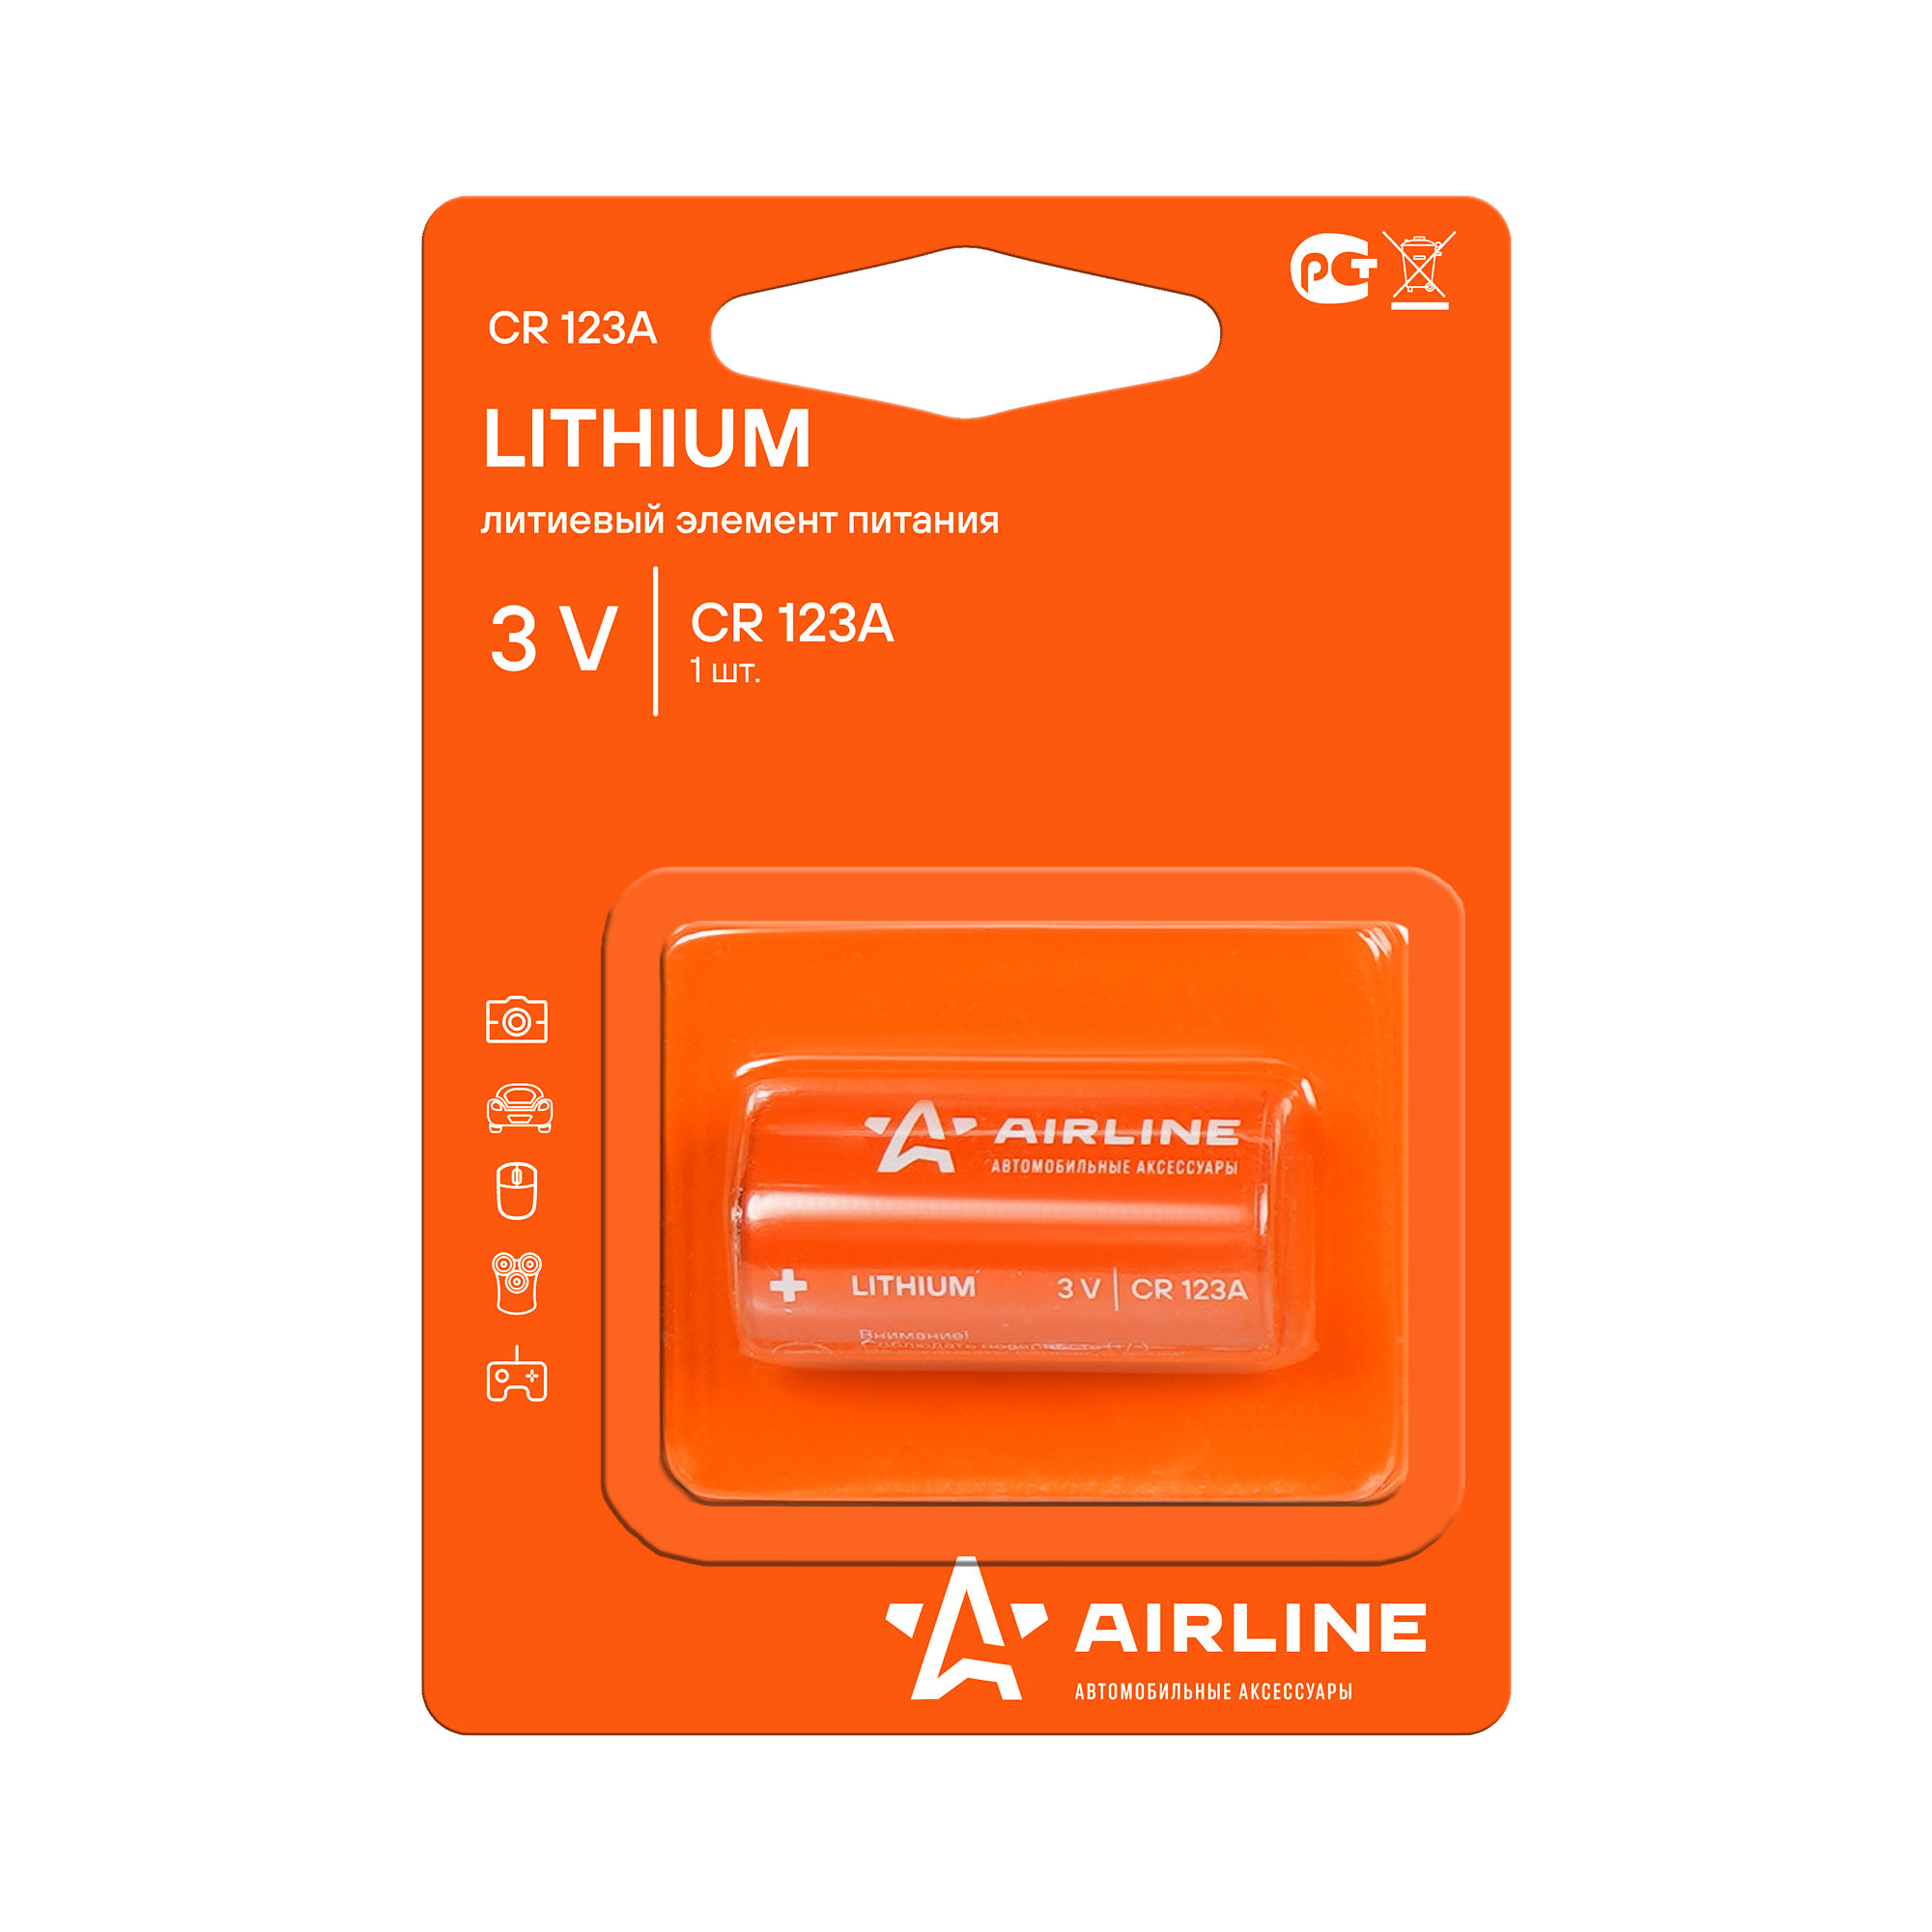 Батарейка литиевая AIRLINE Lithium CR123A 3V упаковка 1 шт. CR123A-01 батарейка airline cr245001